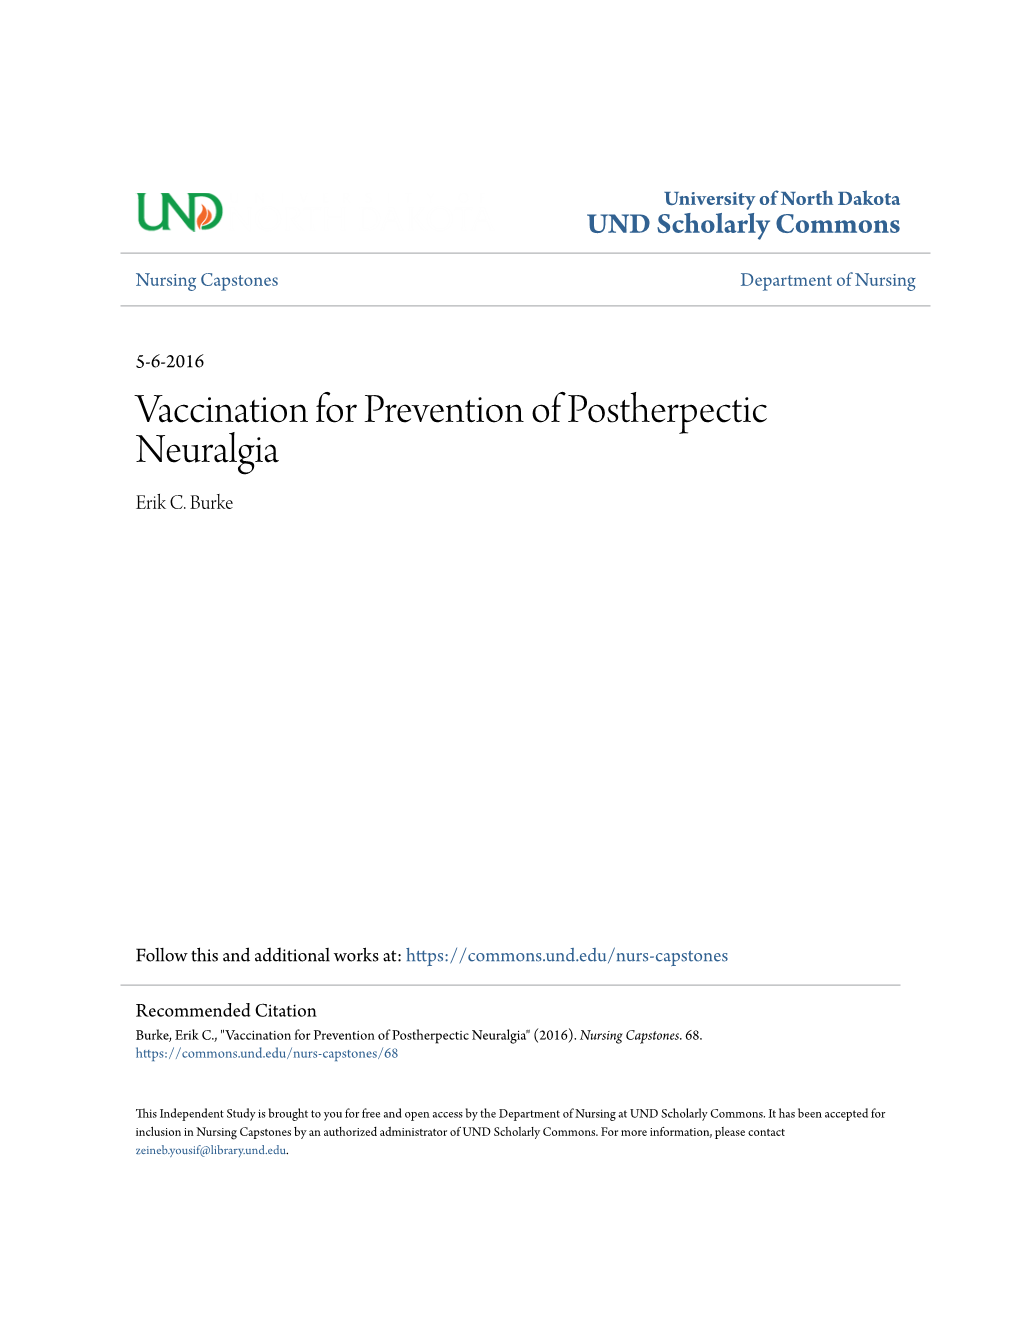 Vaccination for Prevention of Postherpectic Neuralgia Erik C